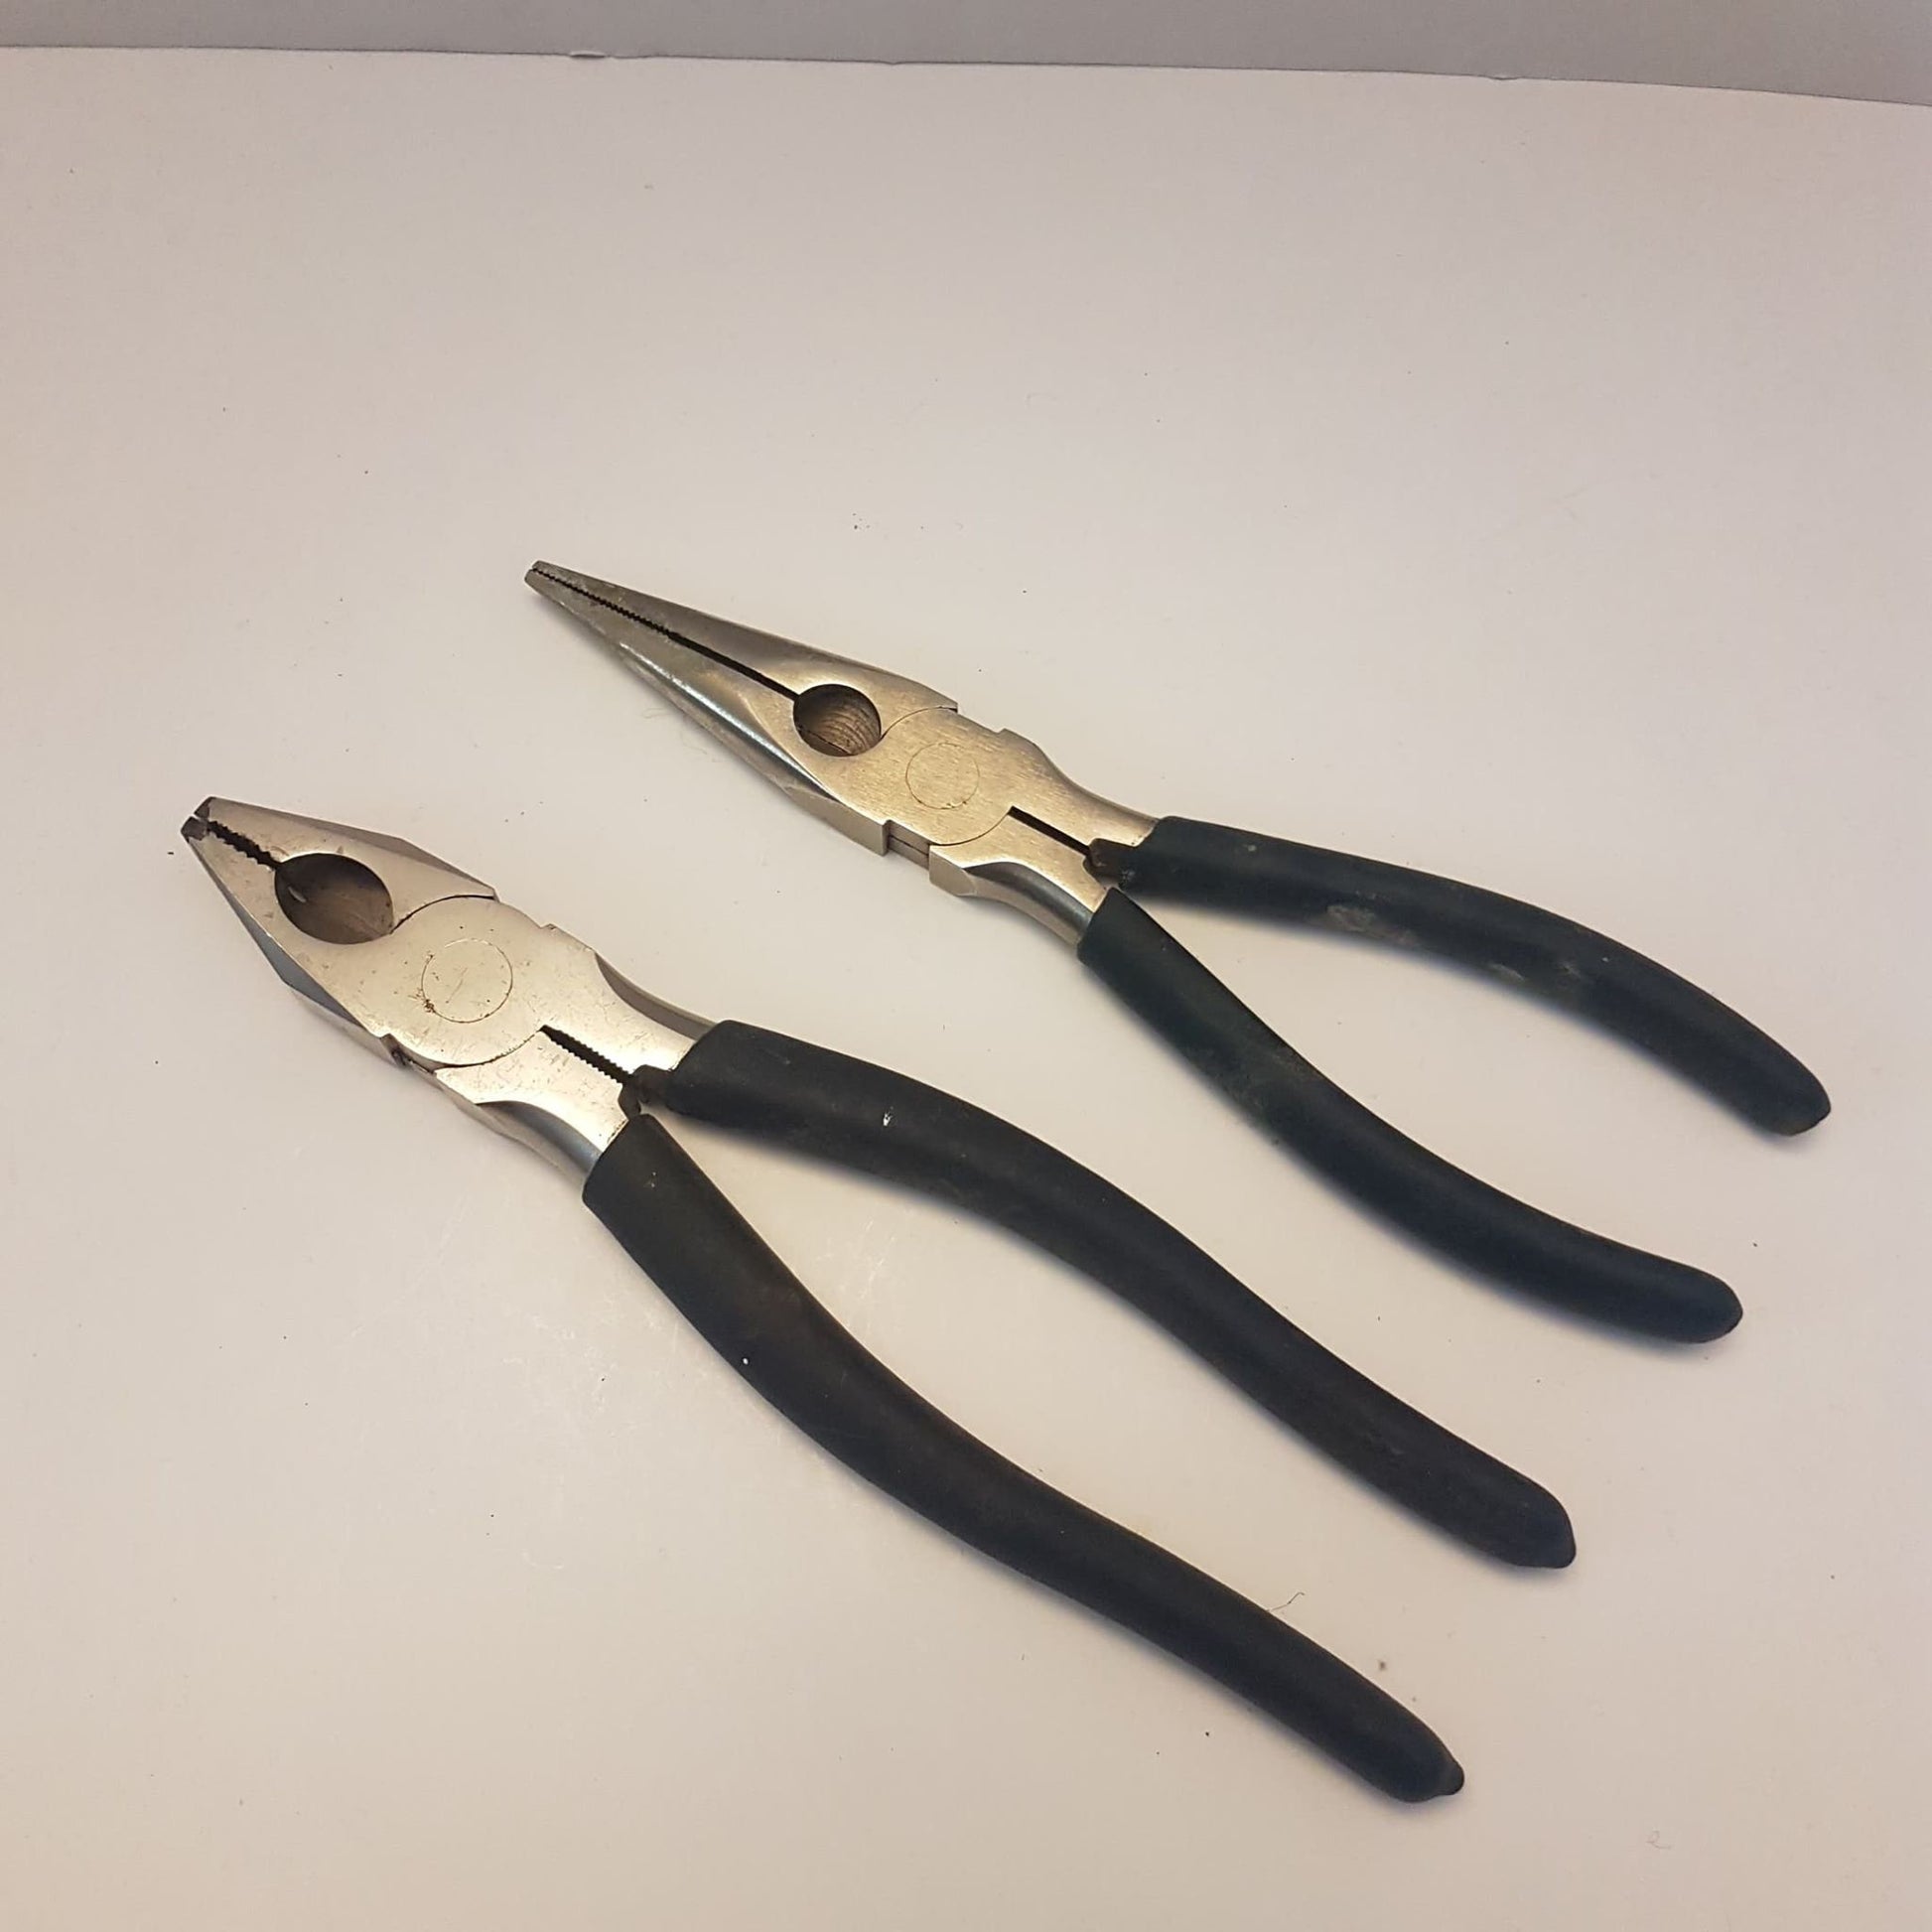 2 pairs of mastercraft pliers